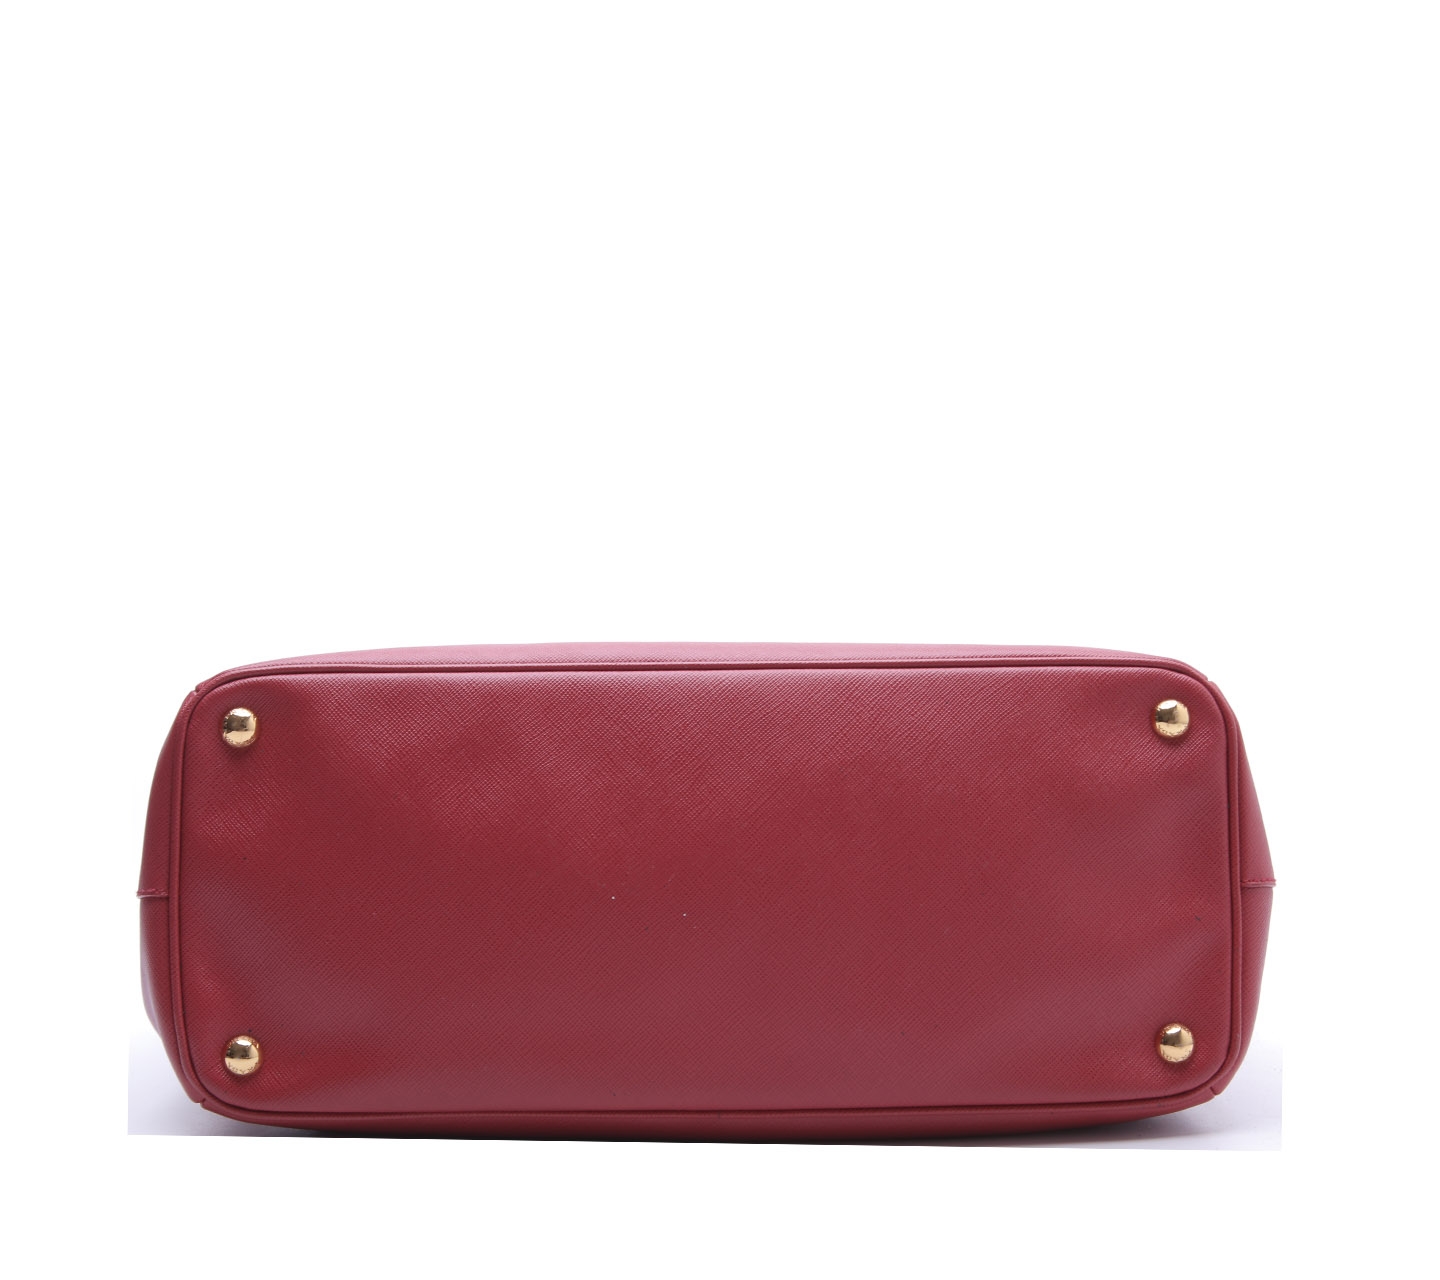 Prada Saffiano Lux Red Satchel Bag